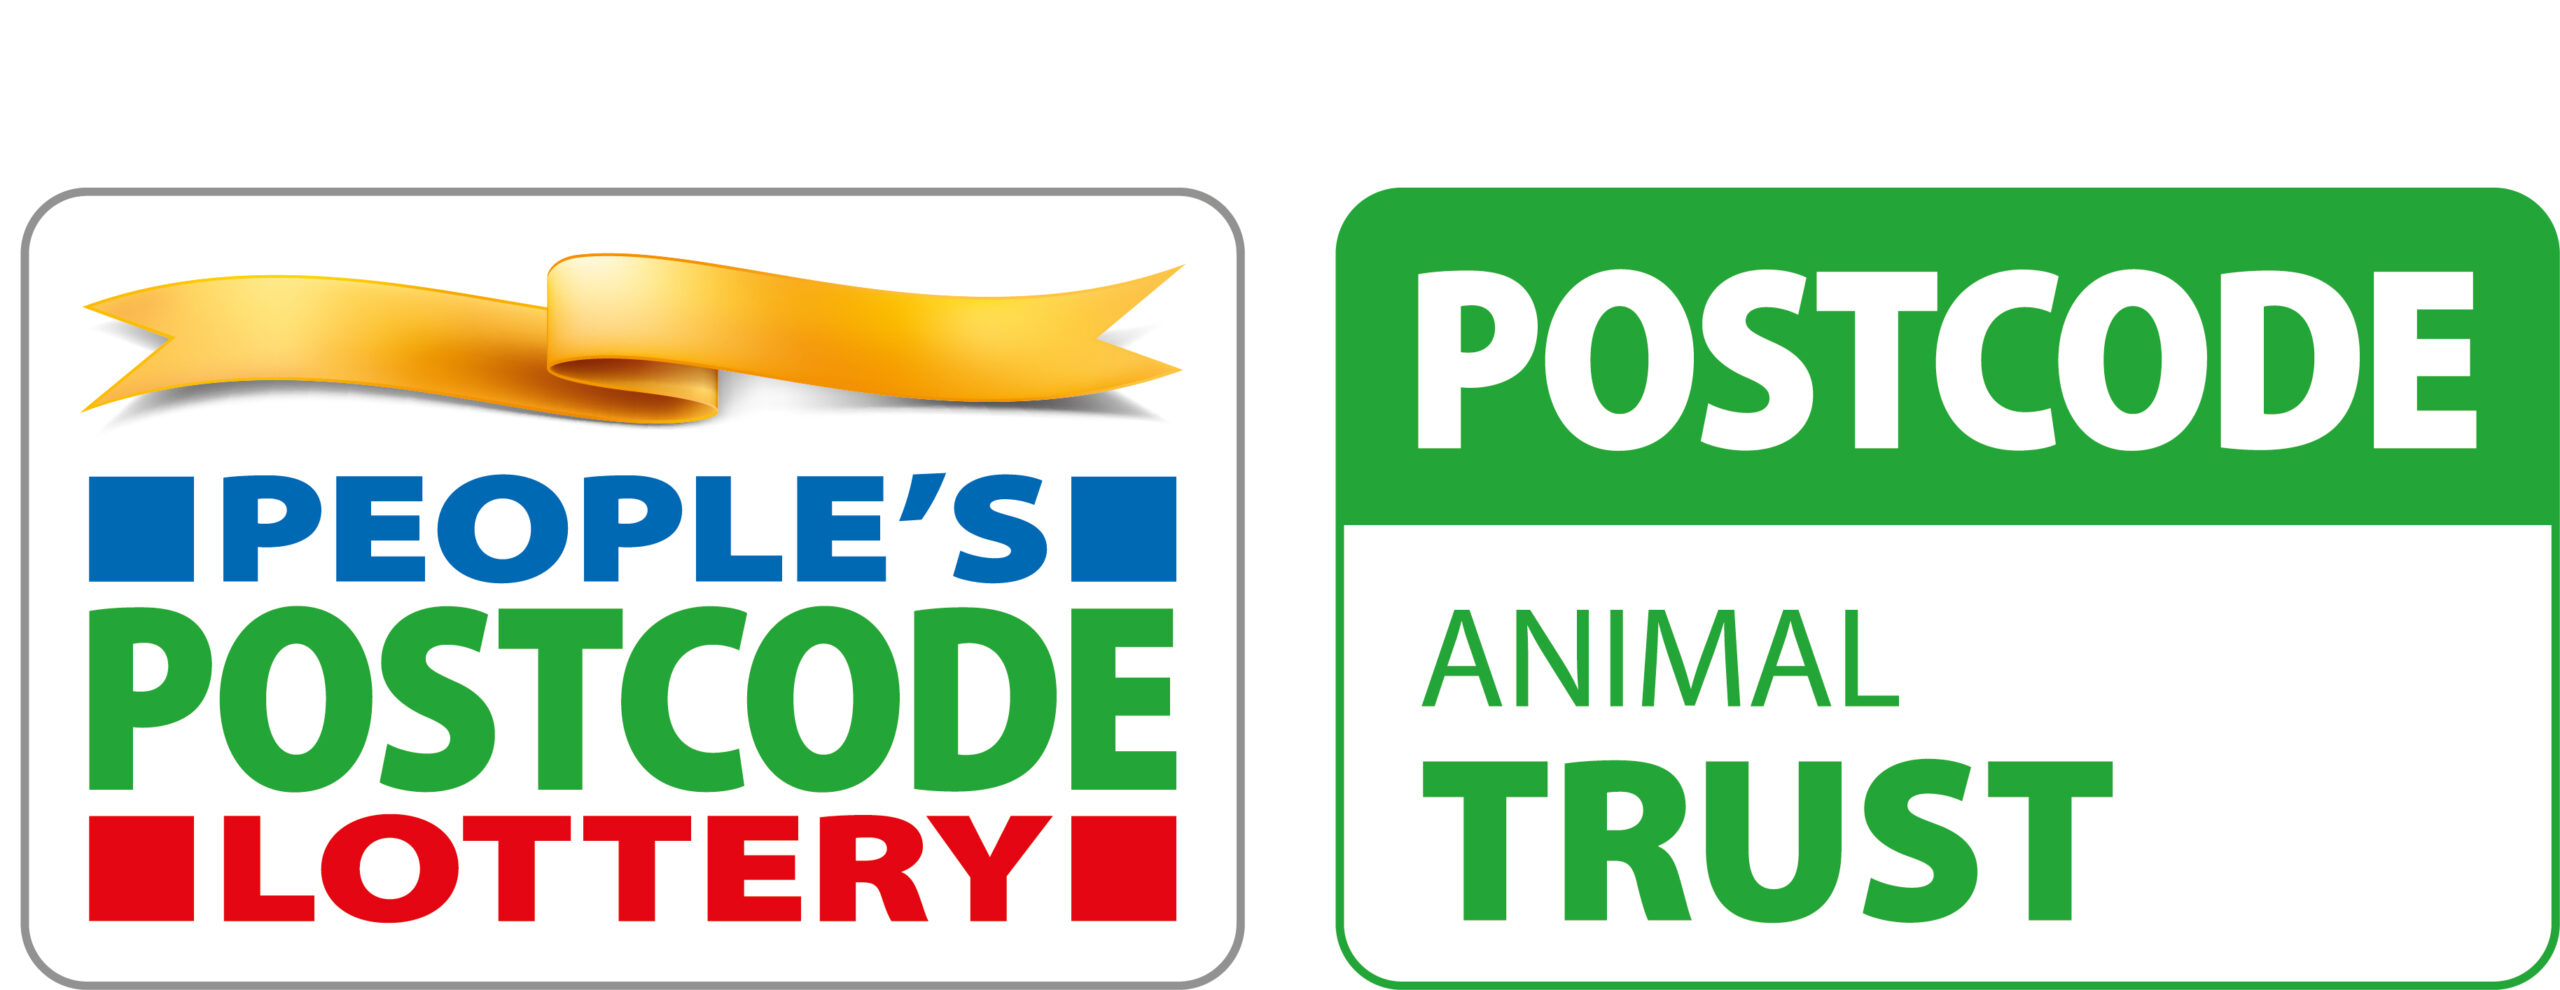 People's Postcode Lottery Animal Trust